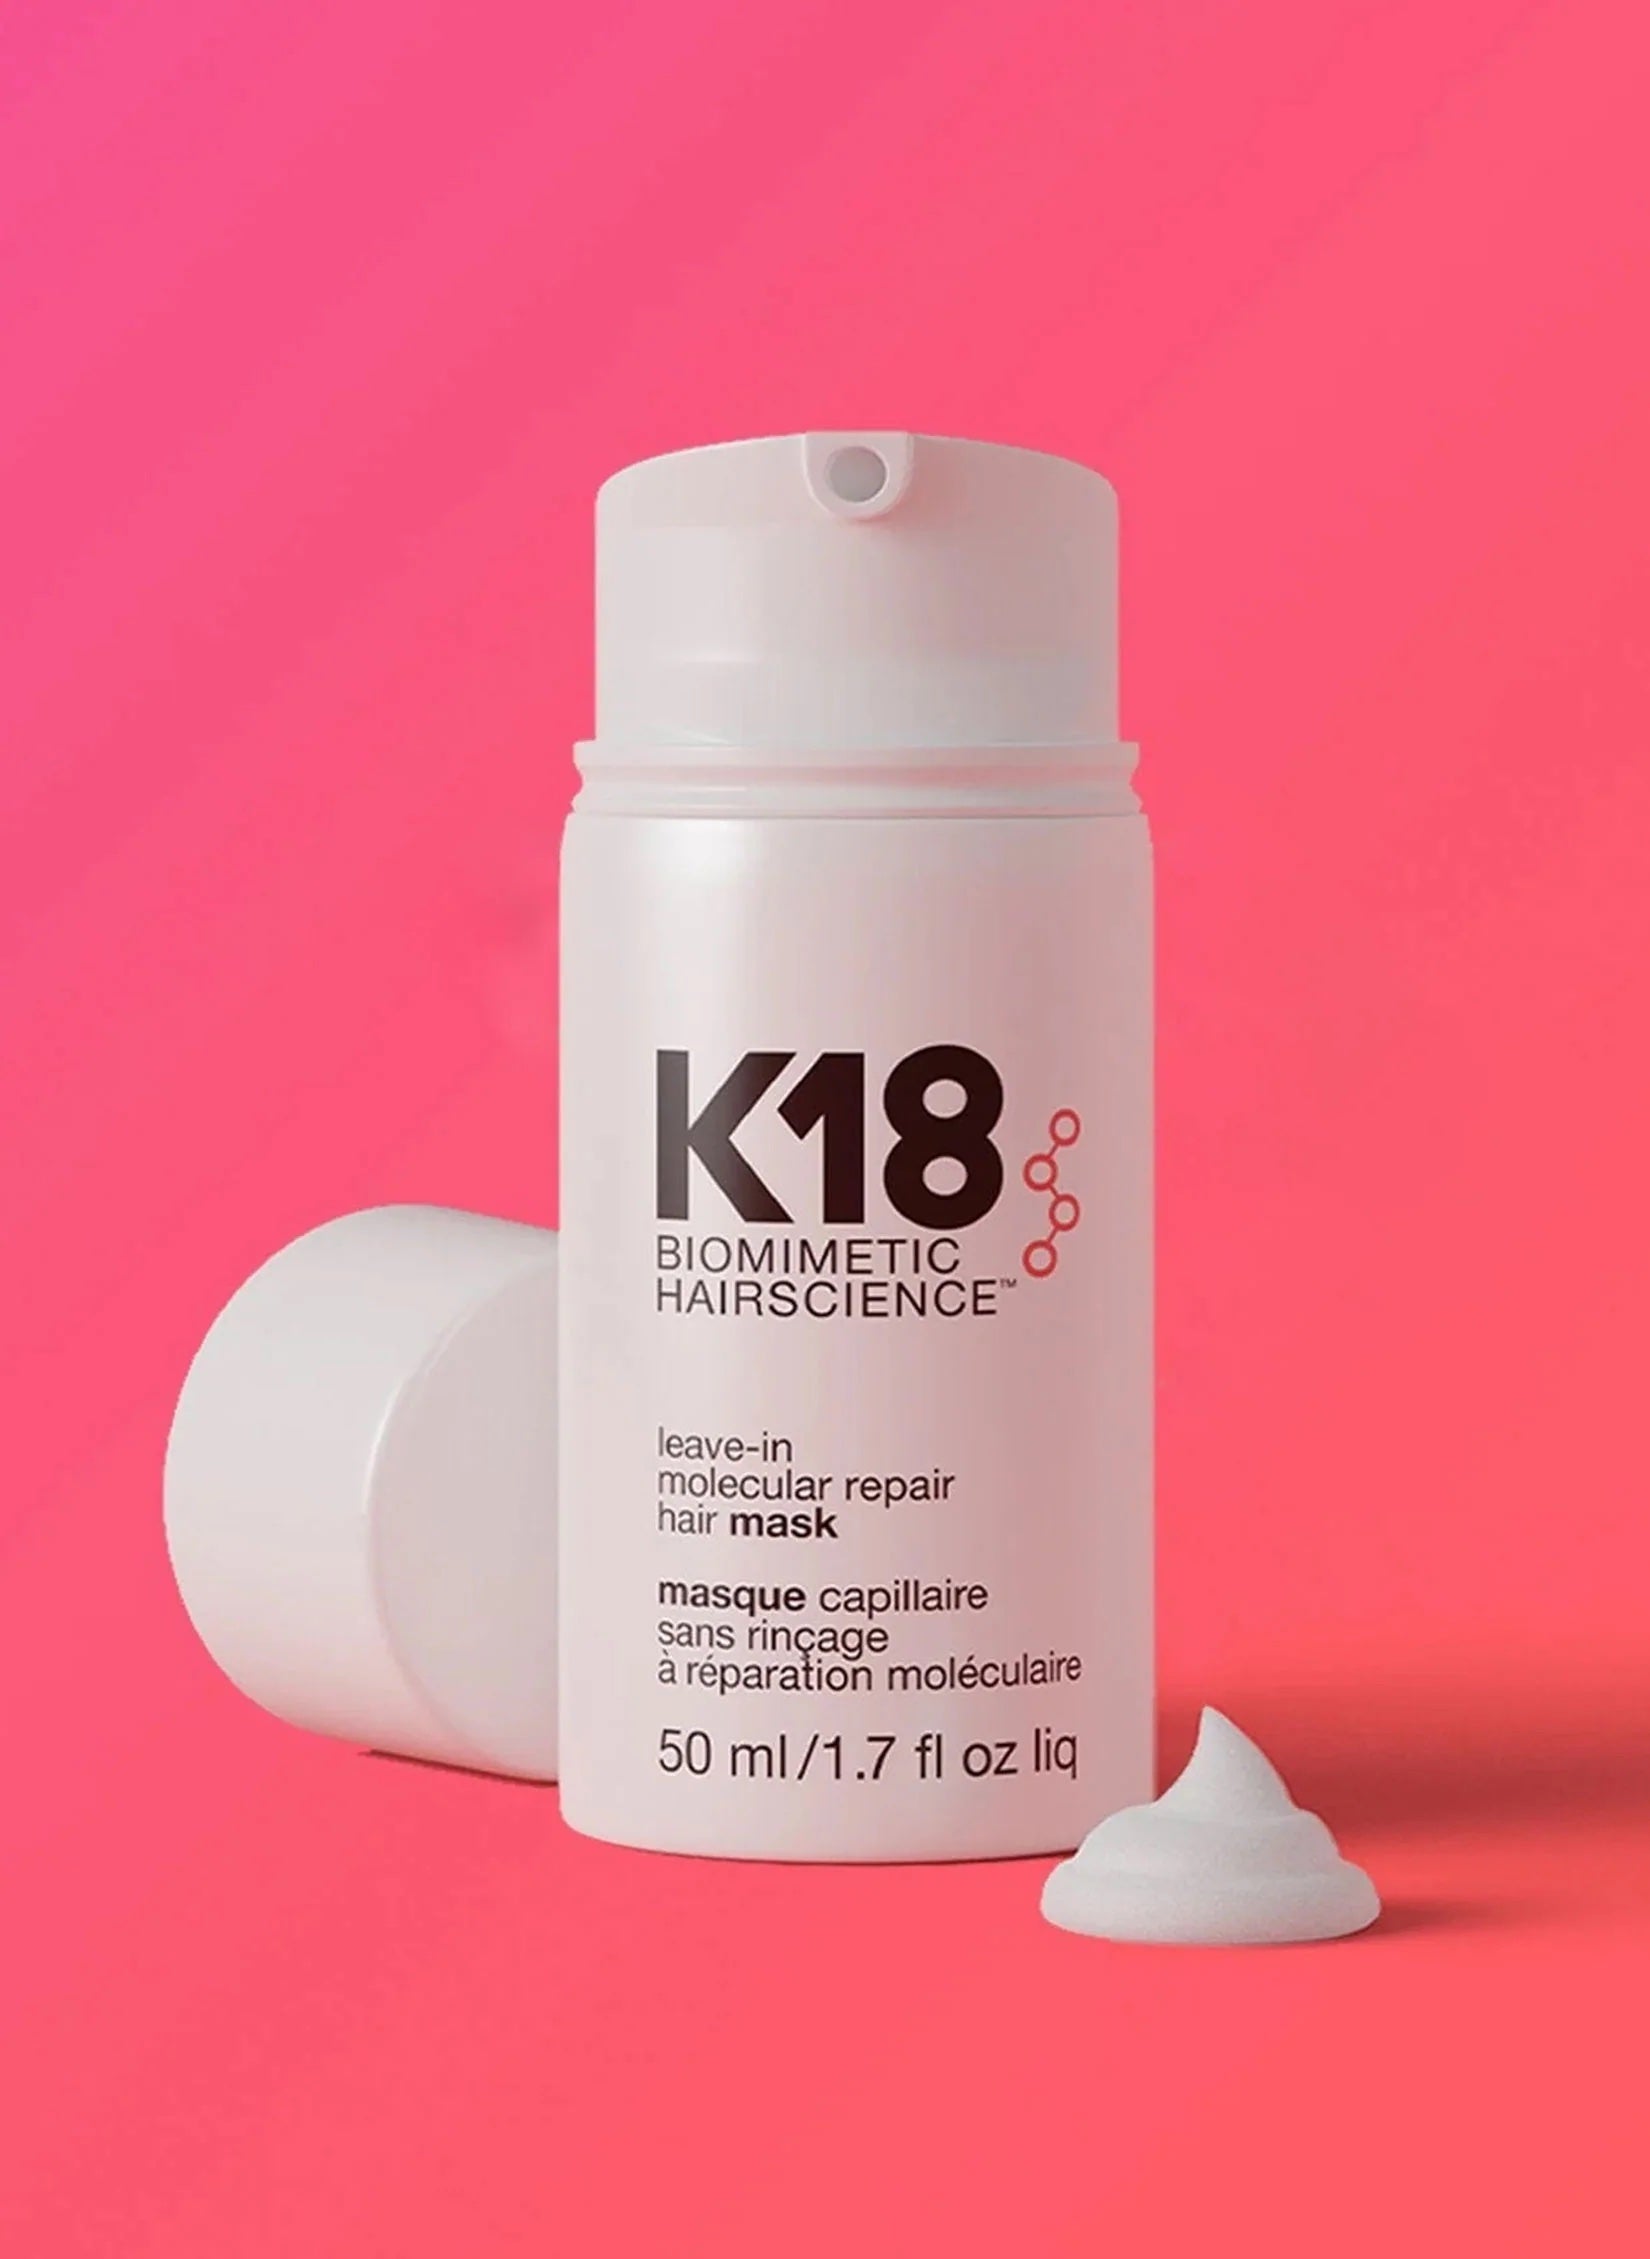 K18 4分鐘家用修護髮膜 | Leave-In Molecular Repair Hair Mask 50ml